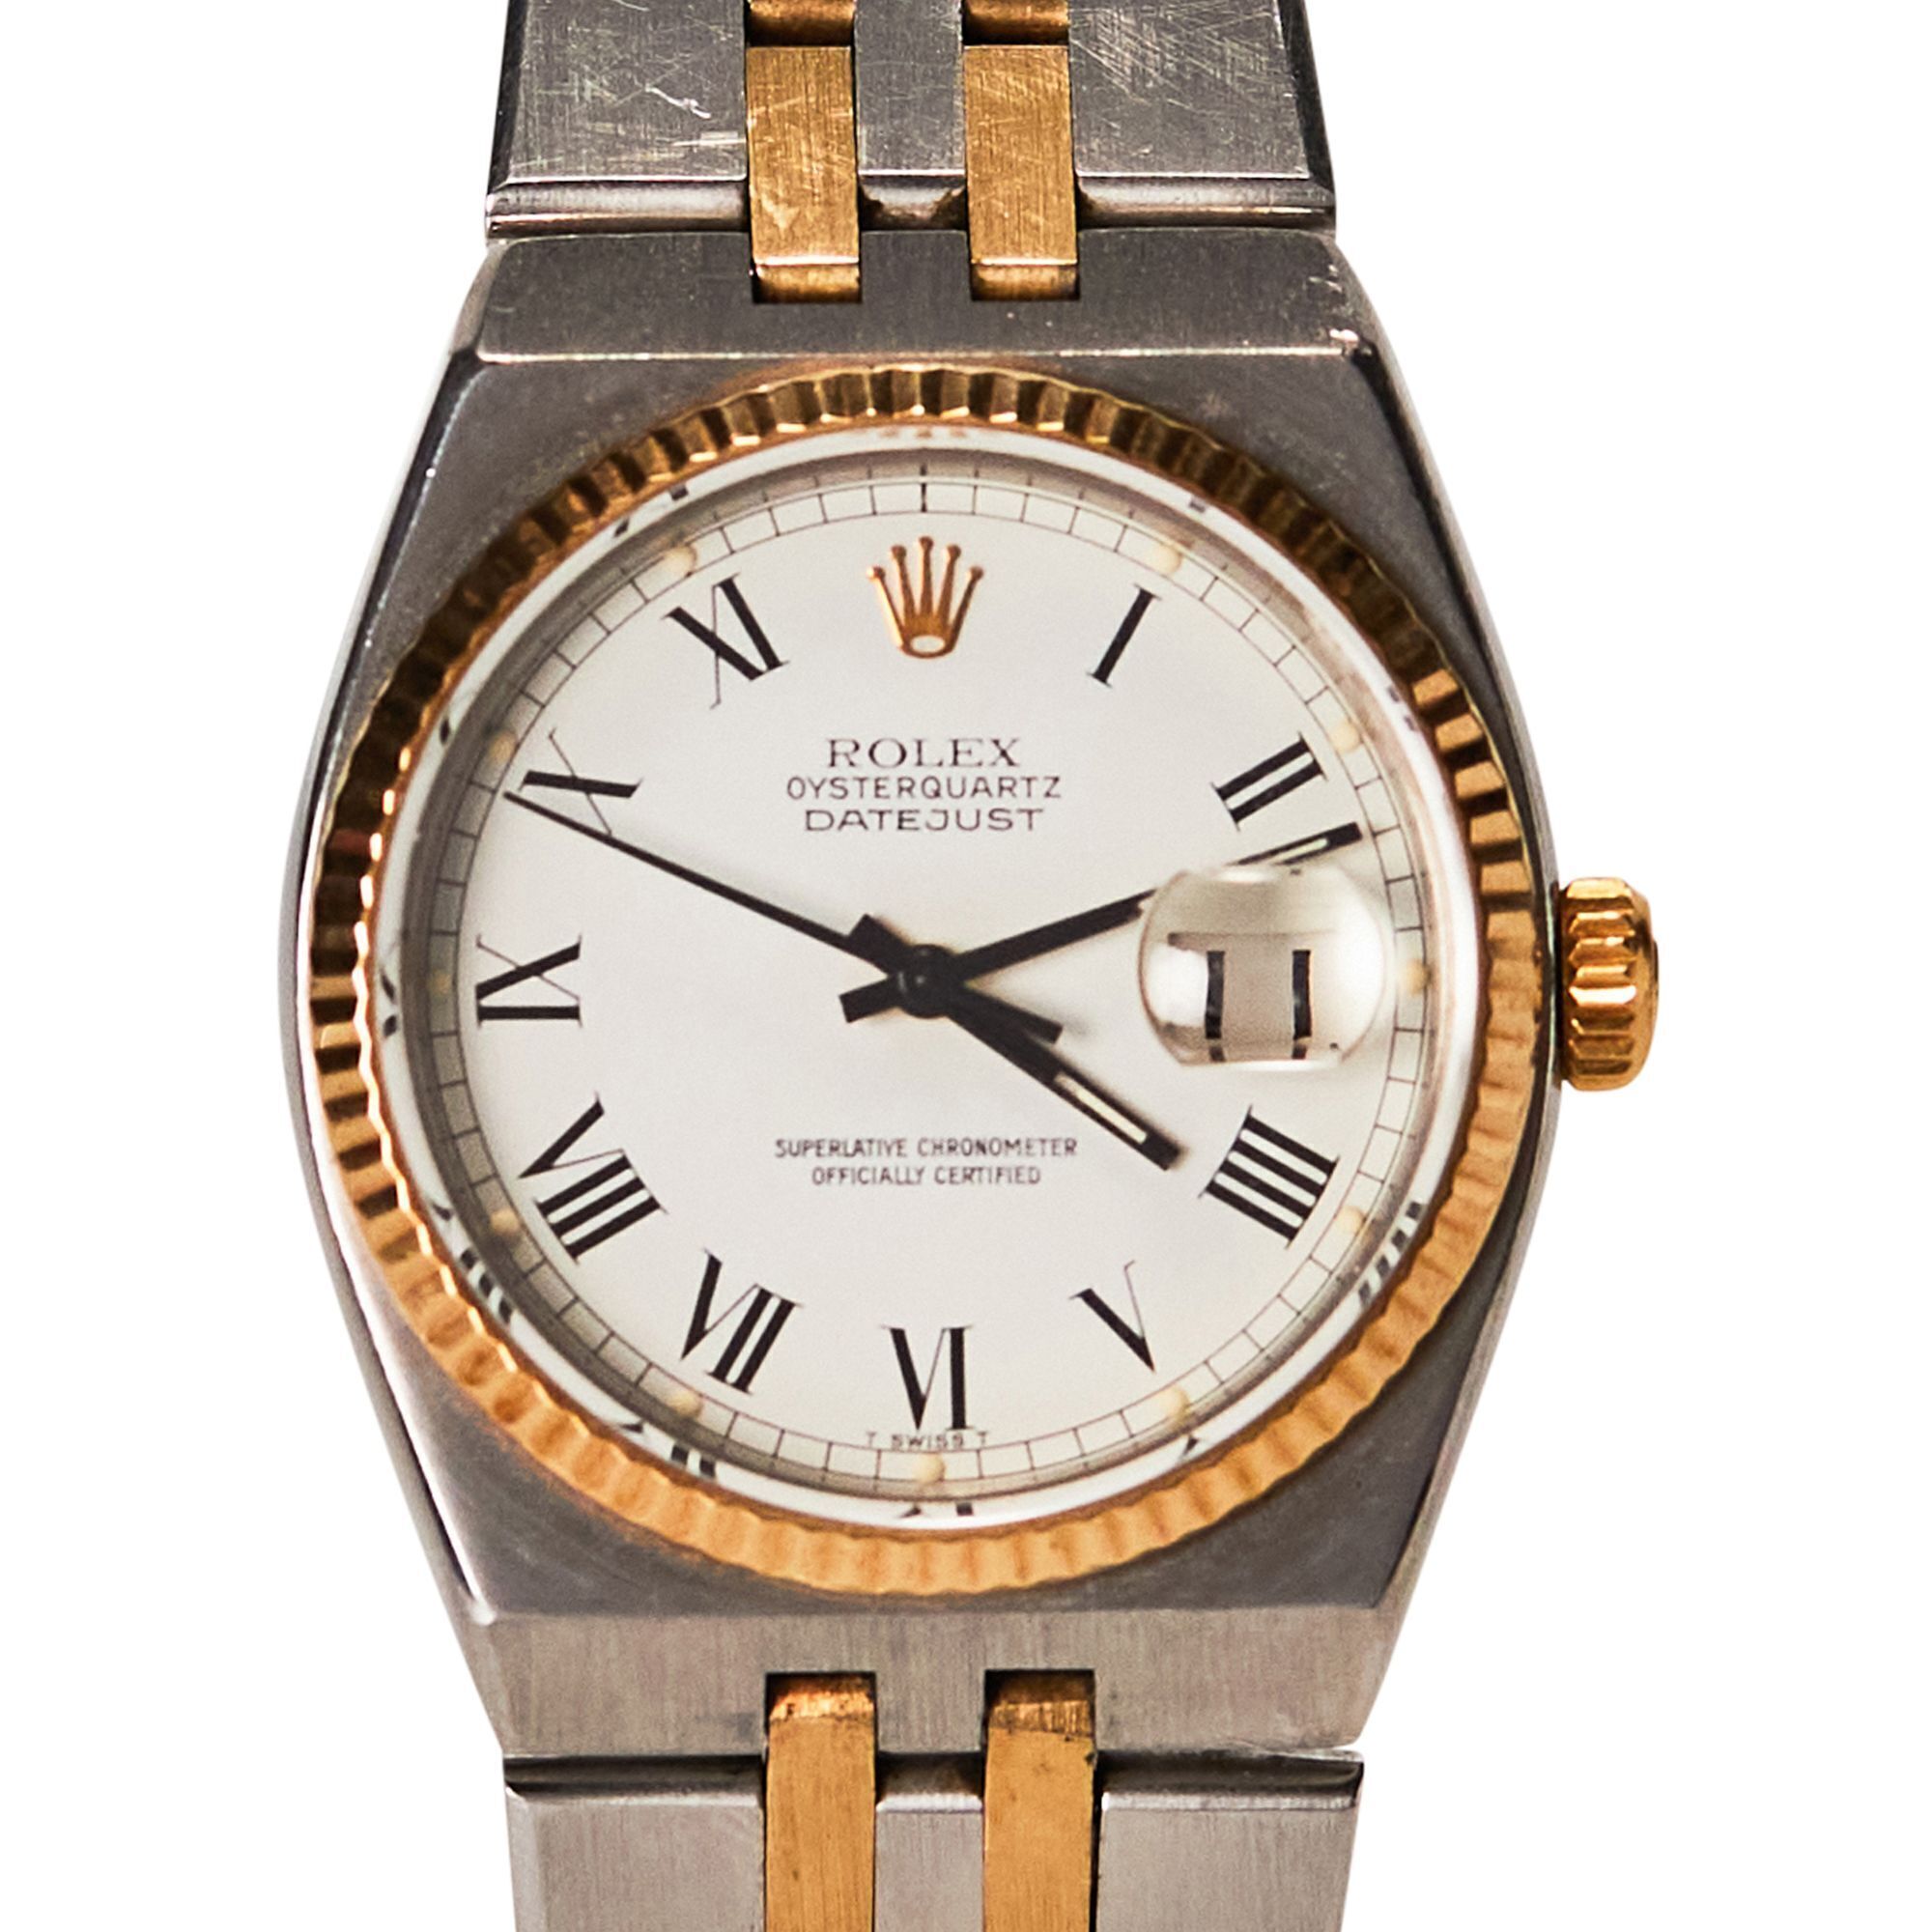 Rolex Oysterquartz Datejust Ref. 17013 Steel & 18K Yellow Gold Men's Wristwatch with Buckley Dial